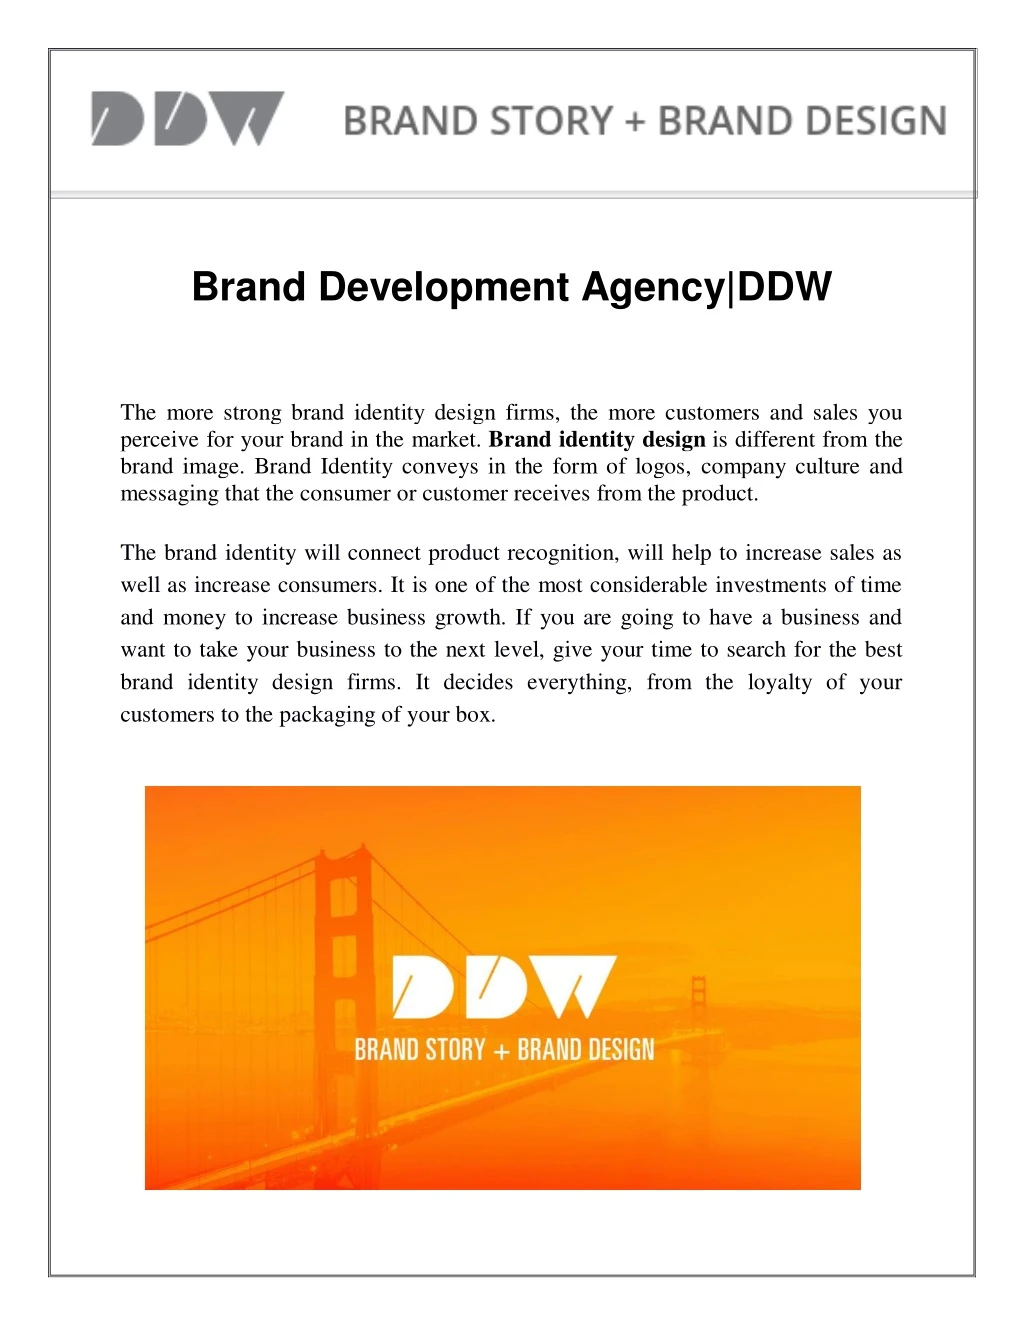 brand development agency ddw